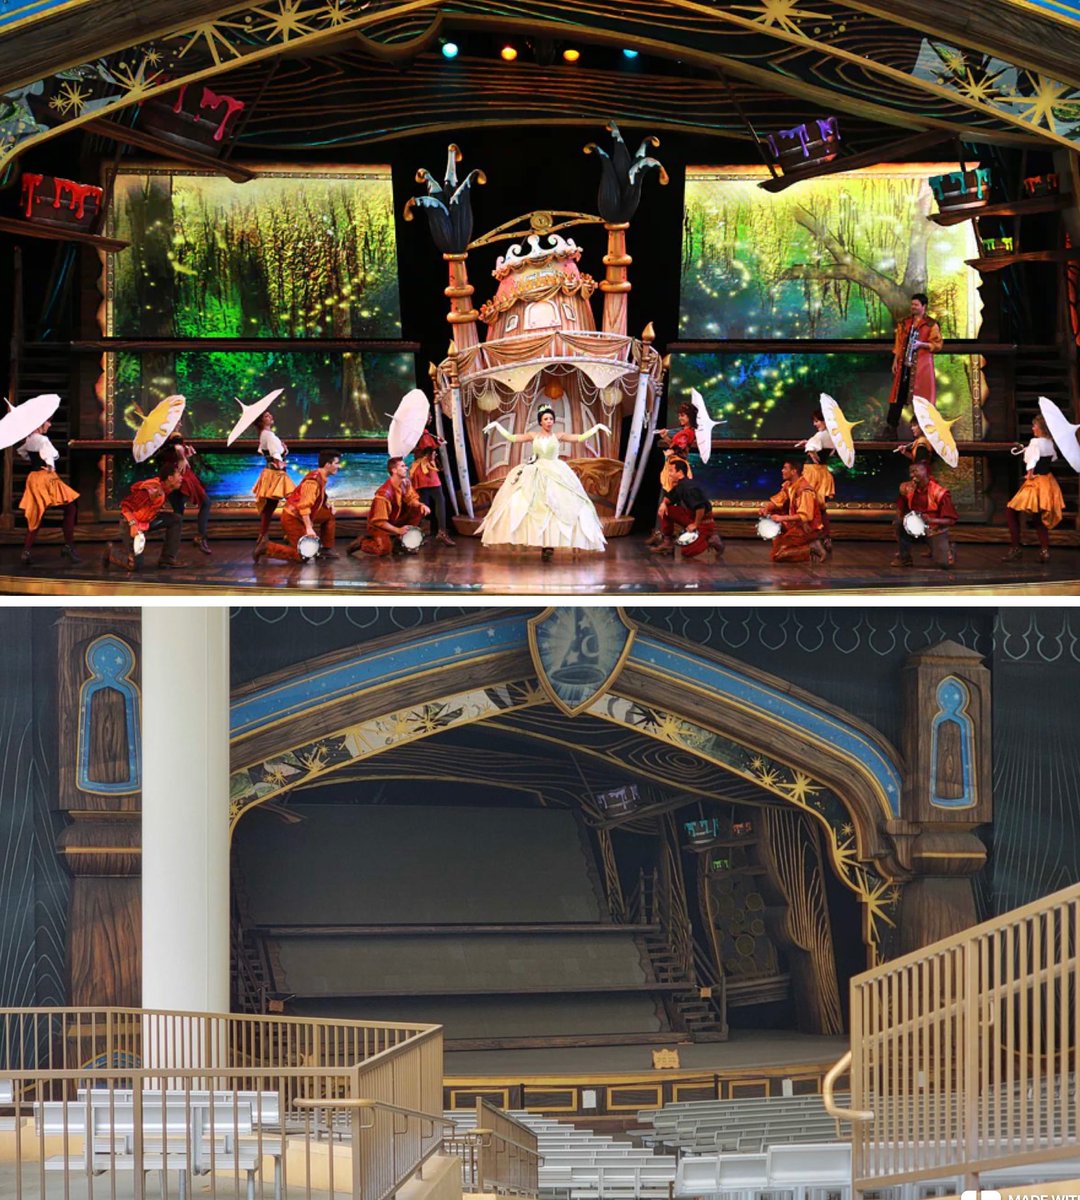 OLD DISNEY
——————
NEW DISNEY

Stage Shows to No Shows

@Disneyland